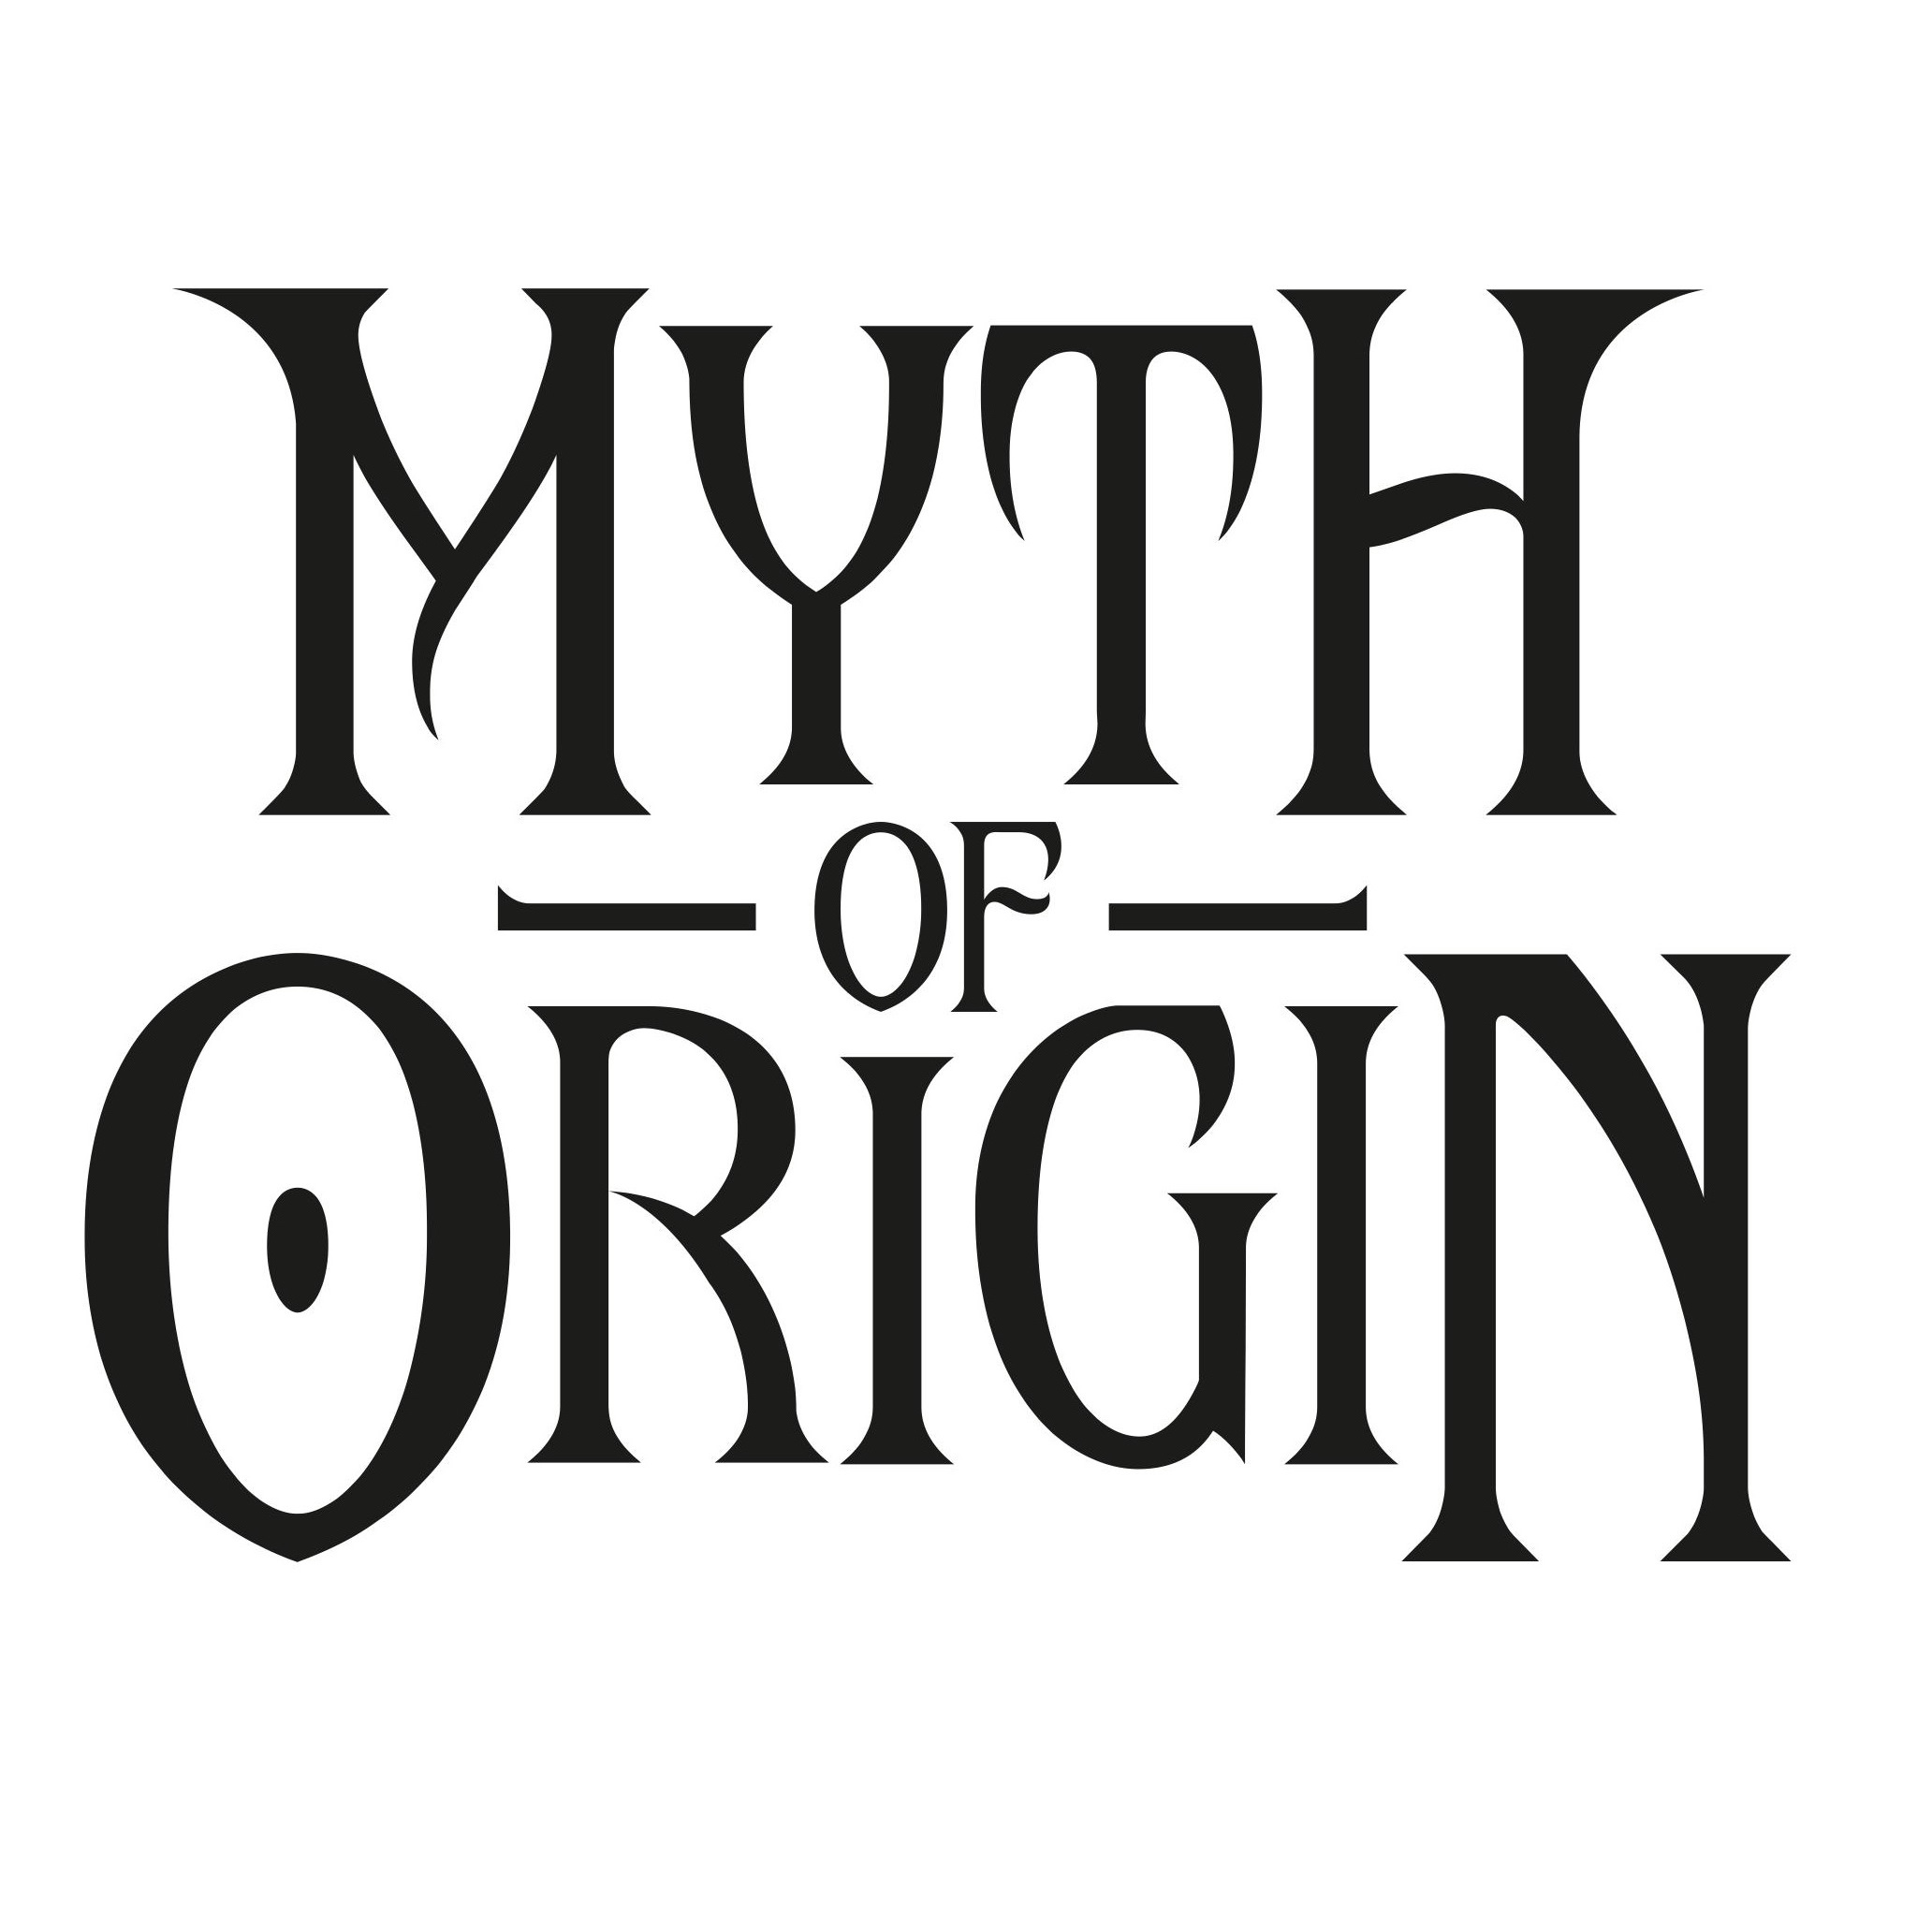 Myth of origin